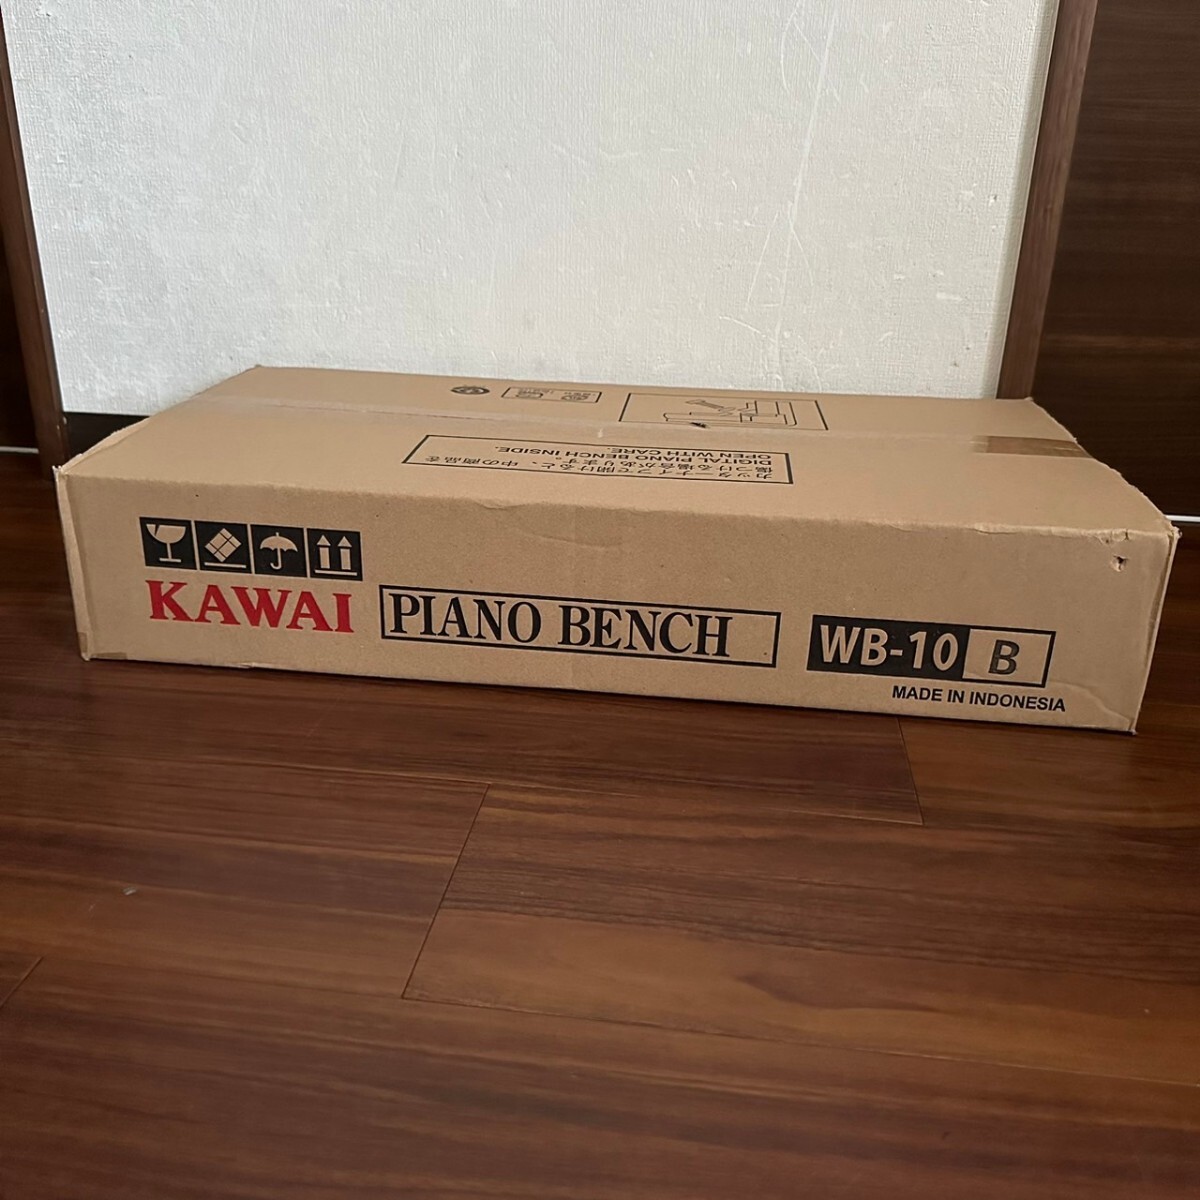  новый товар не использовался KAWAI стул для фортепьяно WB-10 B электронное пианино Kawai 